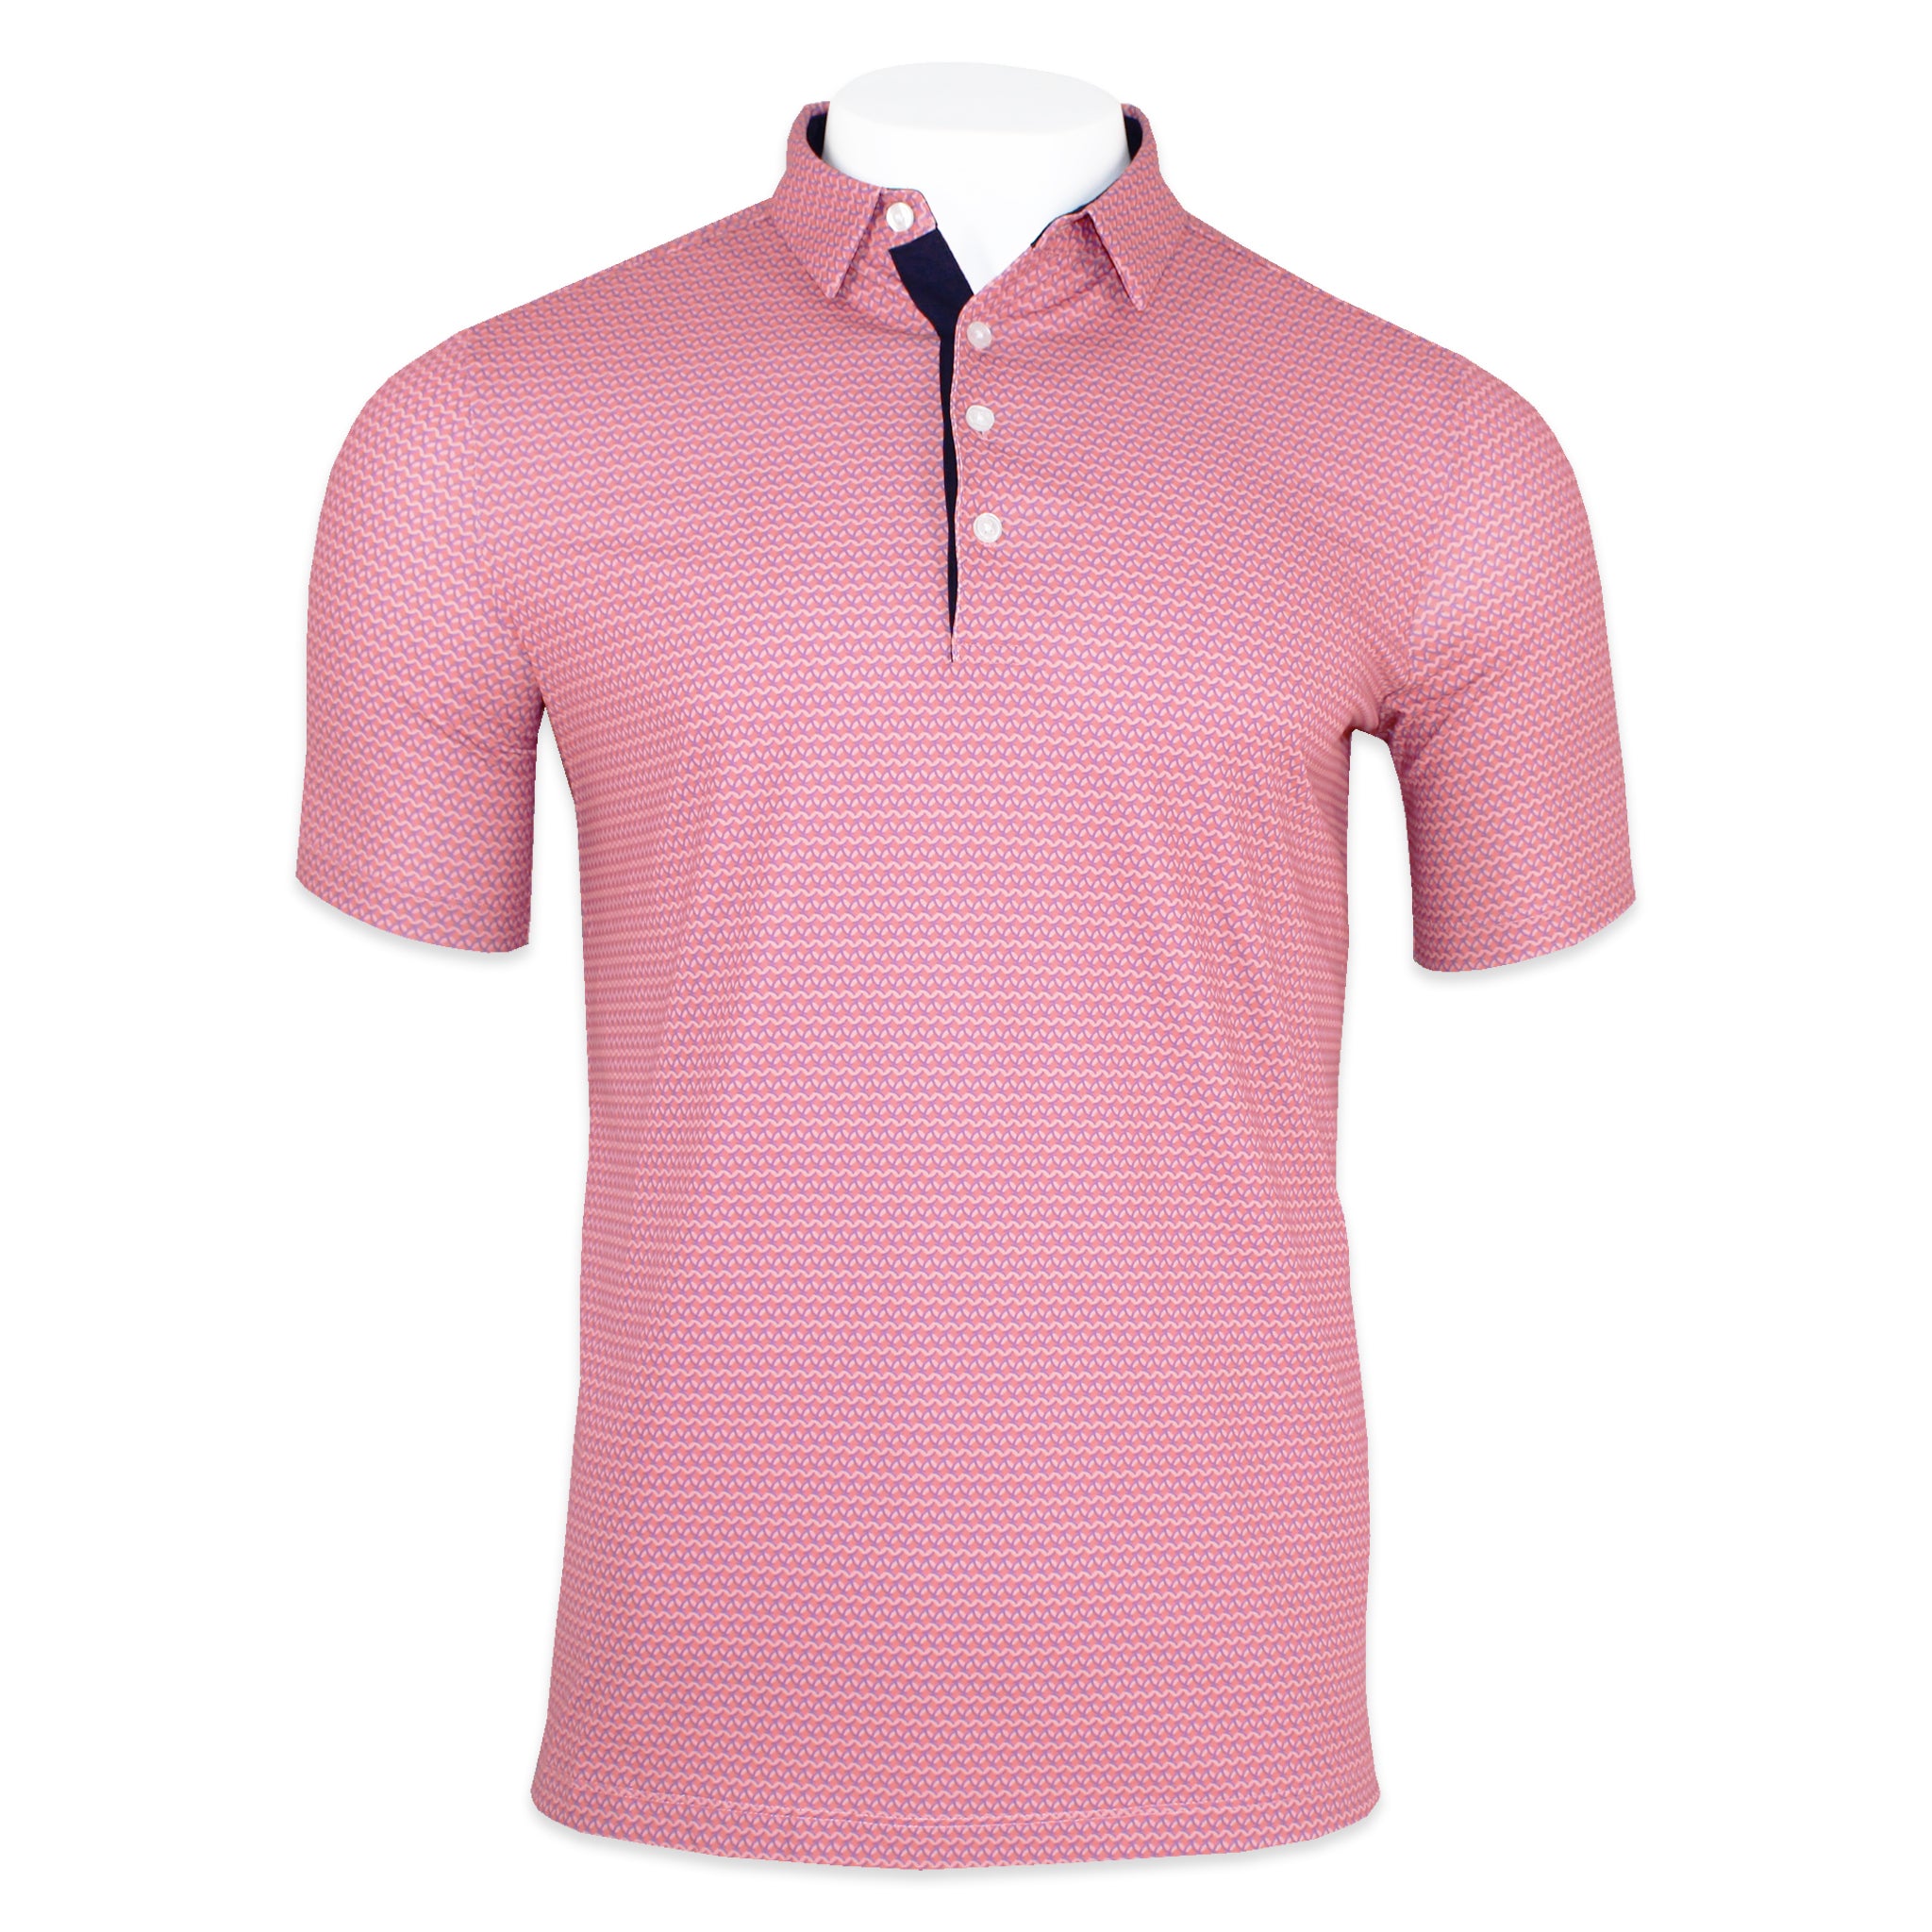 'Ocean Road' Four Button Golf Shirt